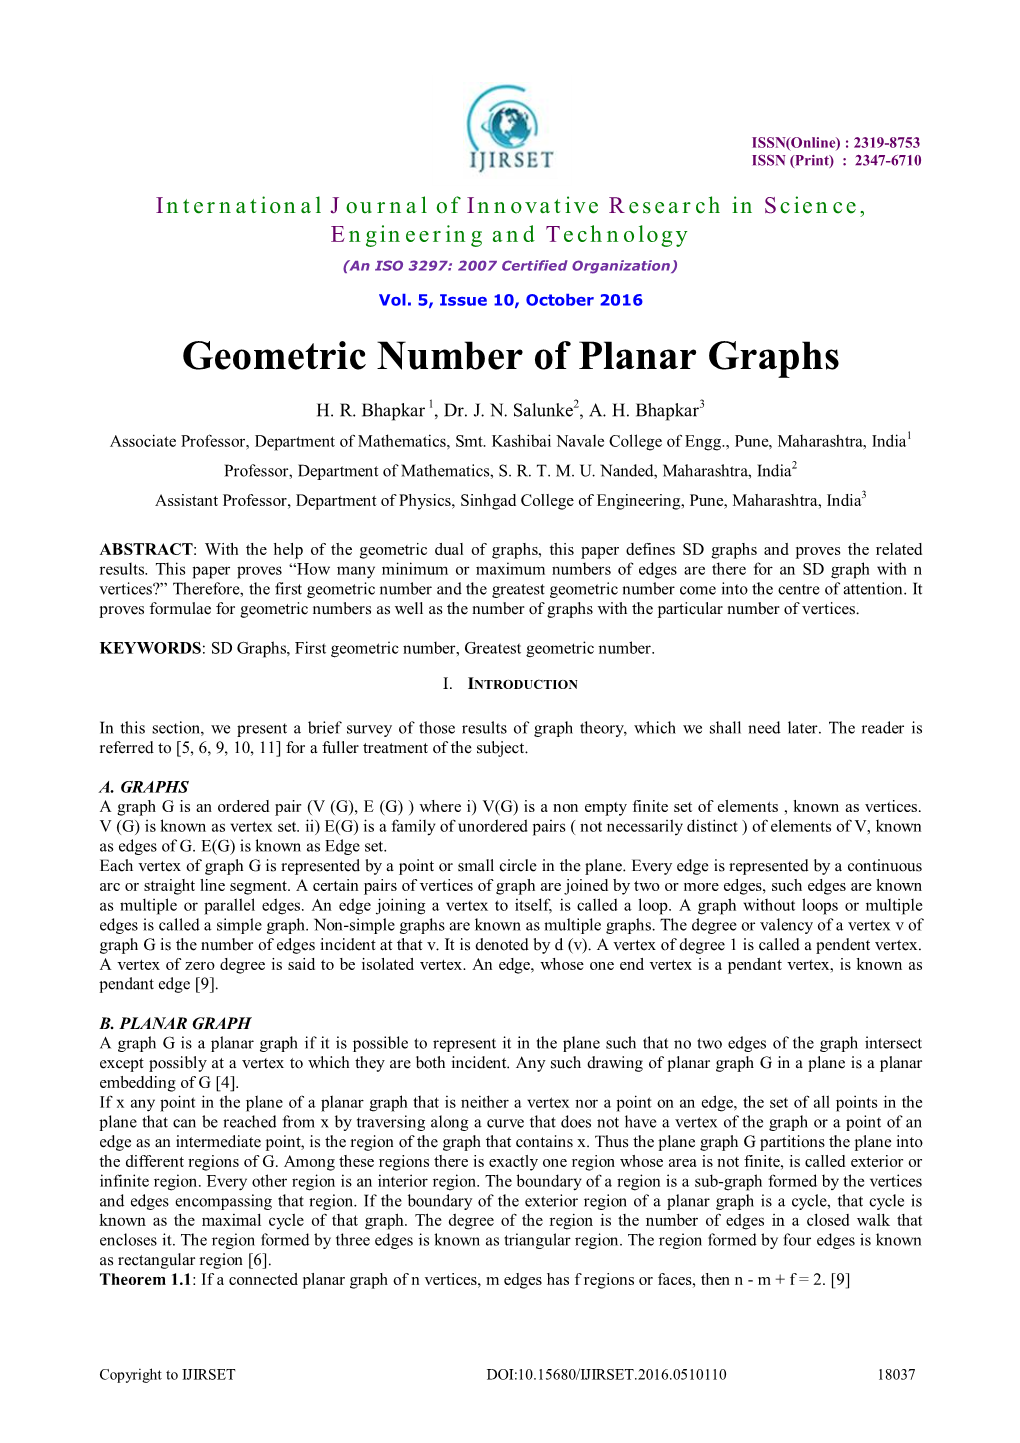 Geometric Number of Planar Graphs